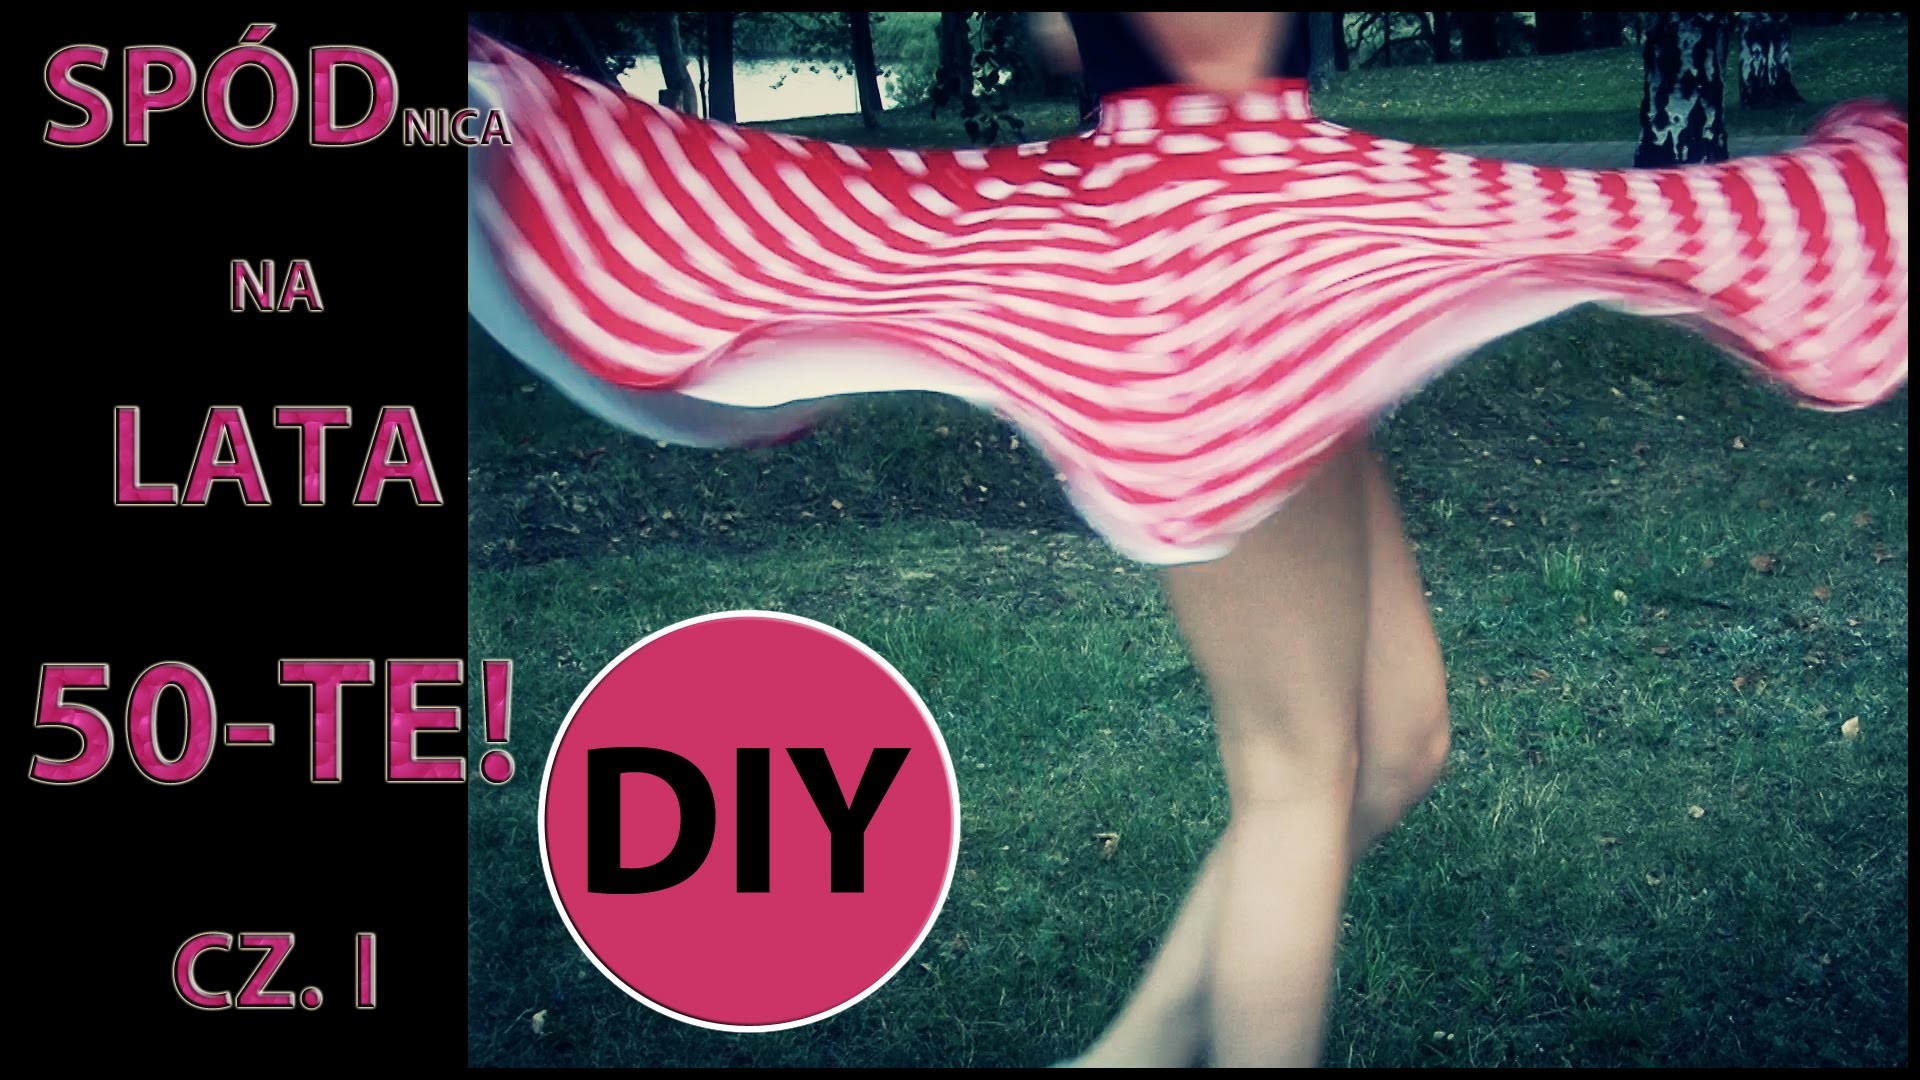 Spódnica  z koła-robimy szablony! CZ I.A circle skirt-we make patterns!DIY! PT I